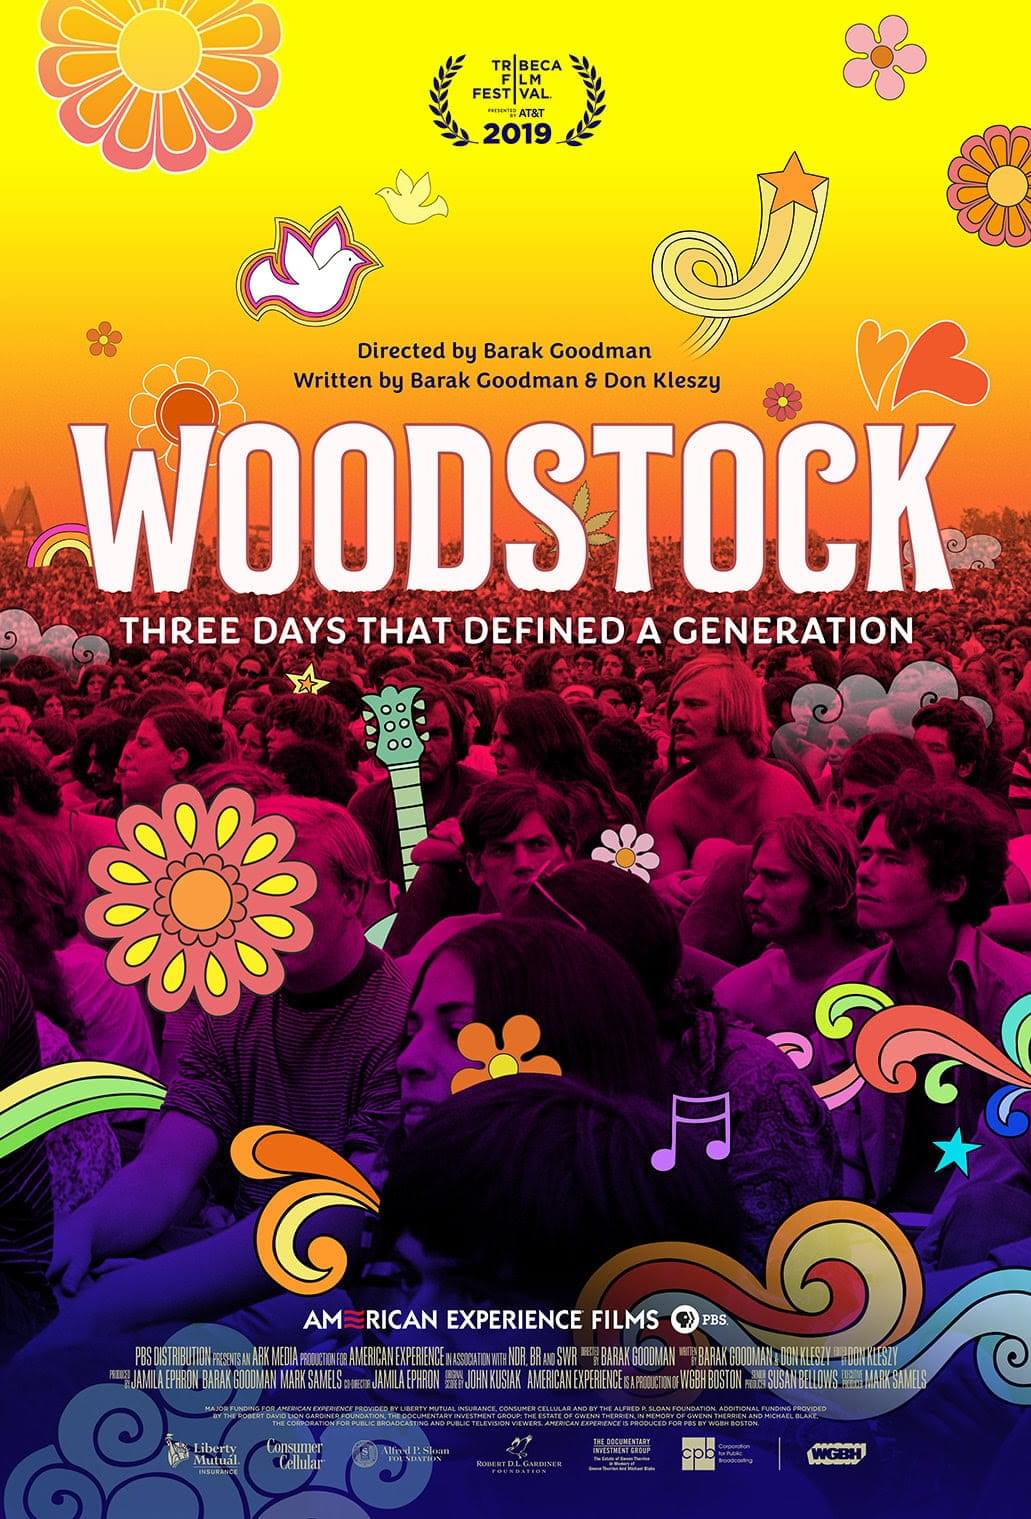 REV-Woodstock-4 Image